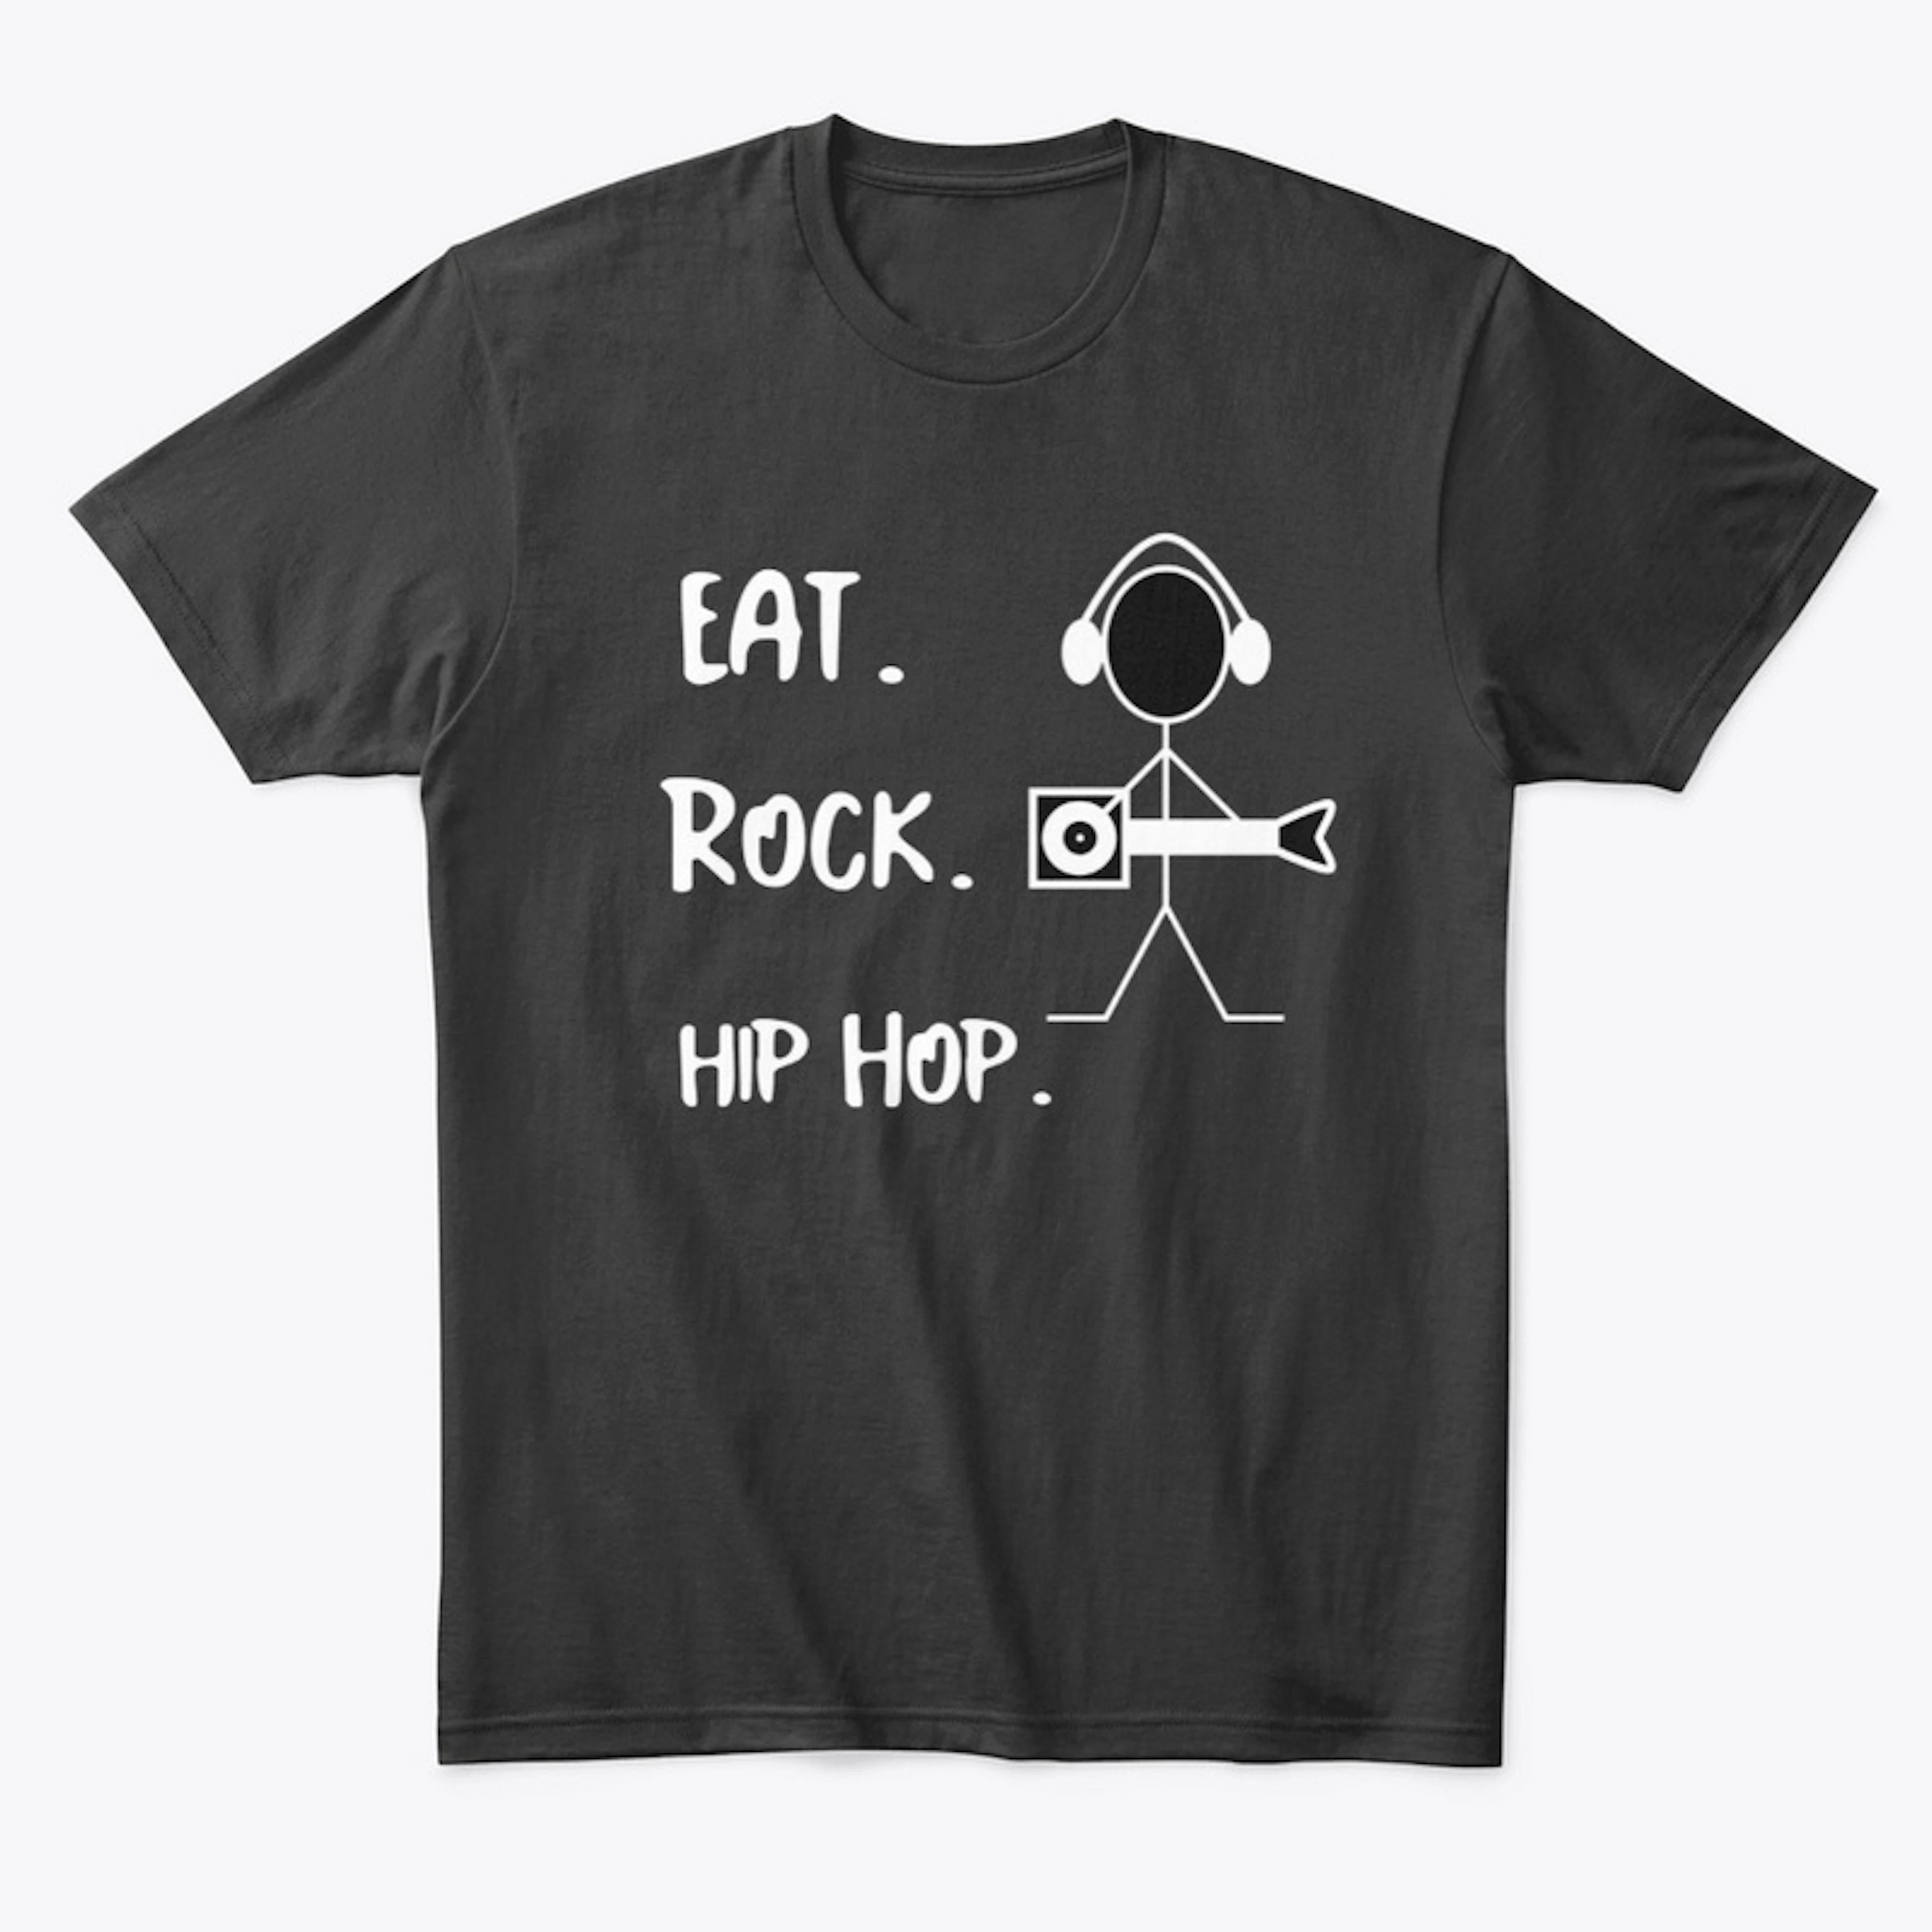  Eat. Rock. Hip Hop. 